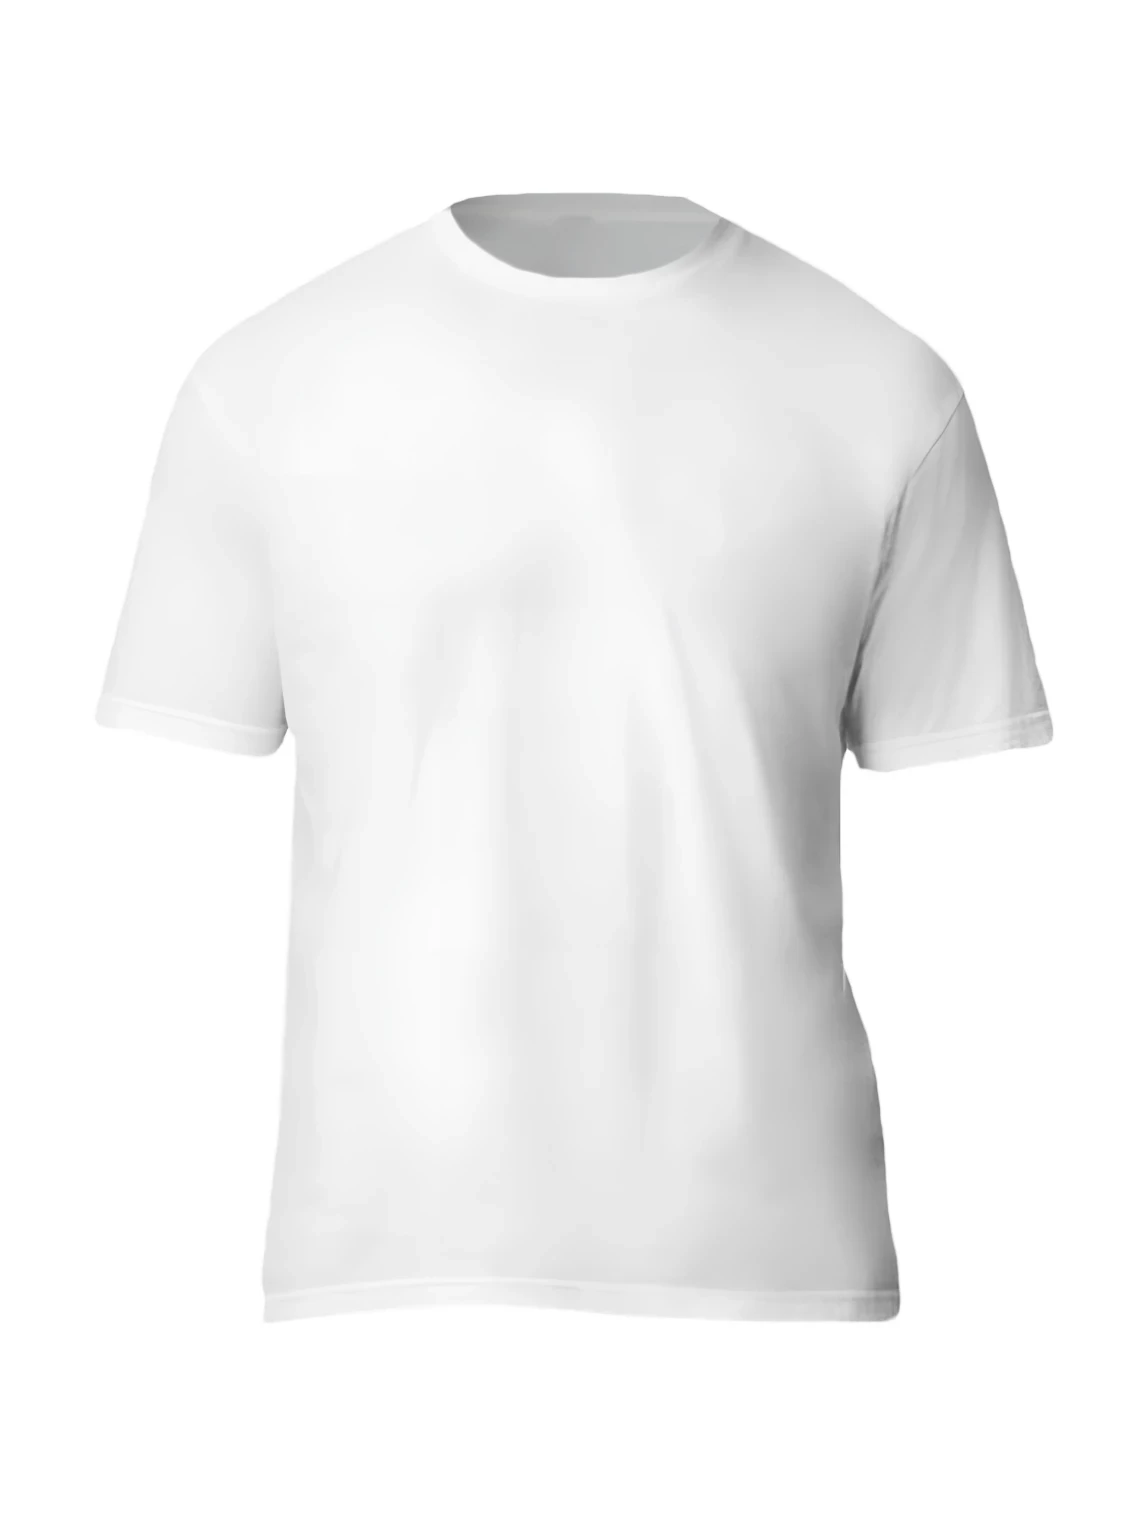 Koszulka T-shirt unisex z nadrukiem Light Cotton Adult GI3000 Gildan